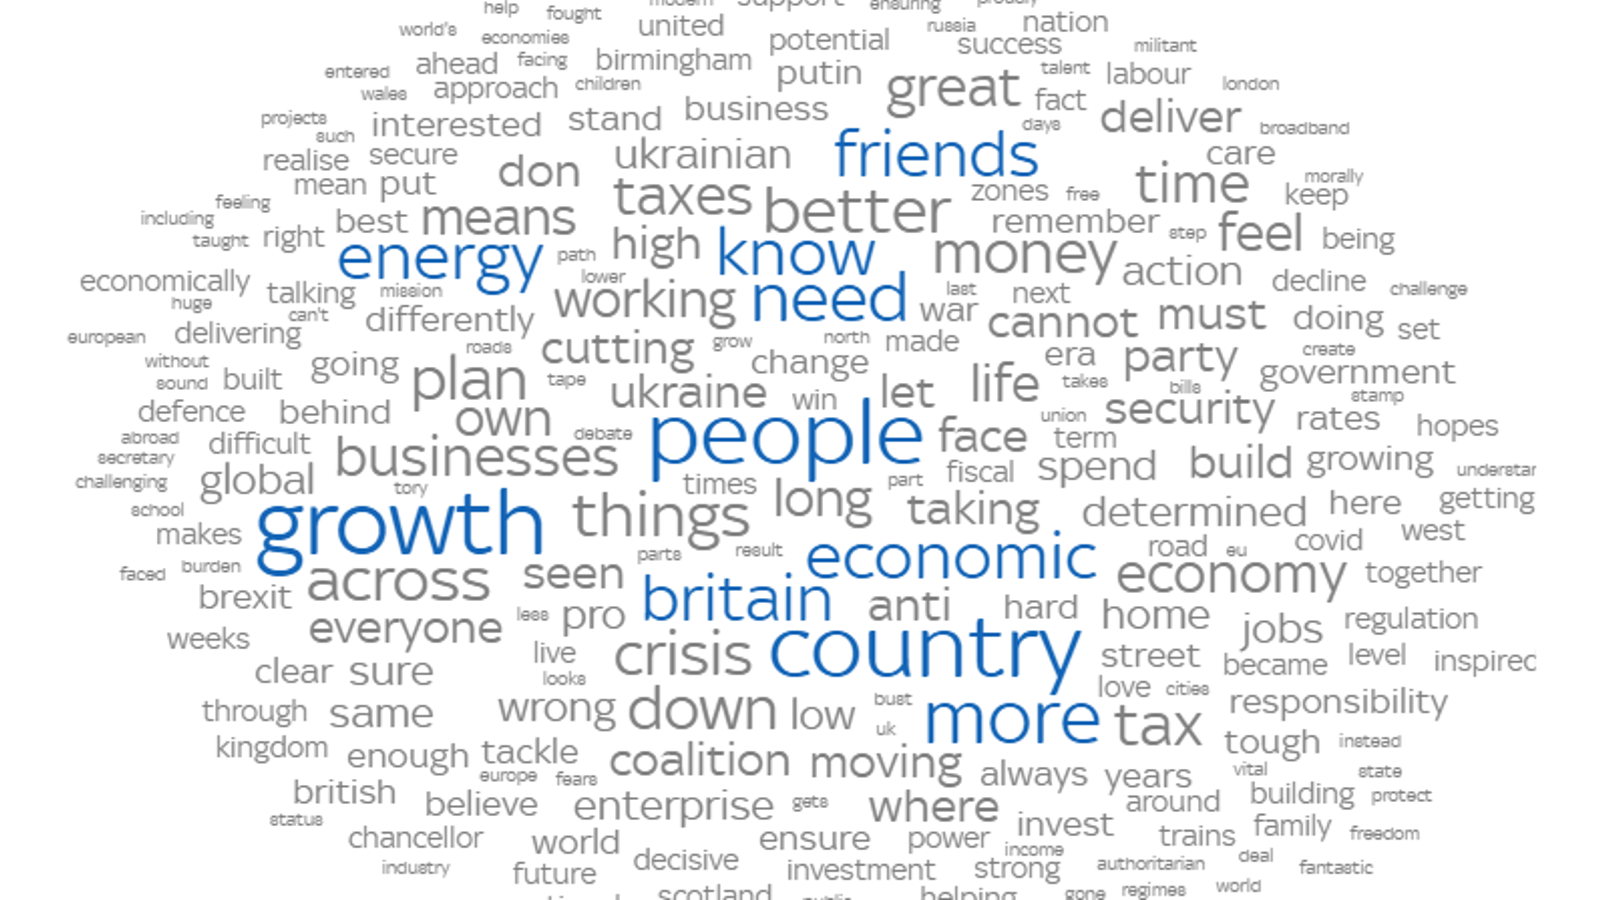 'People', 'growth', 'energy':  How Liz Truss's speech looks as a word cloud